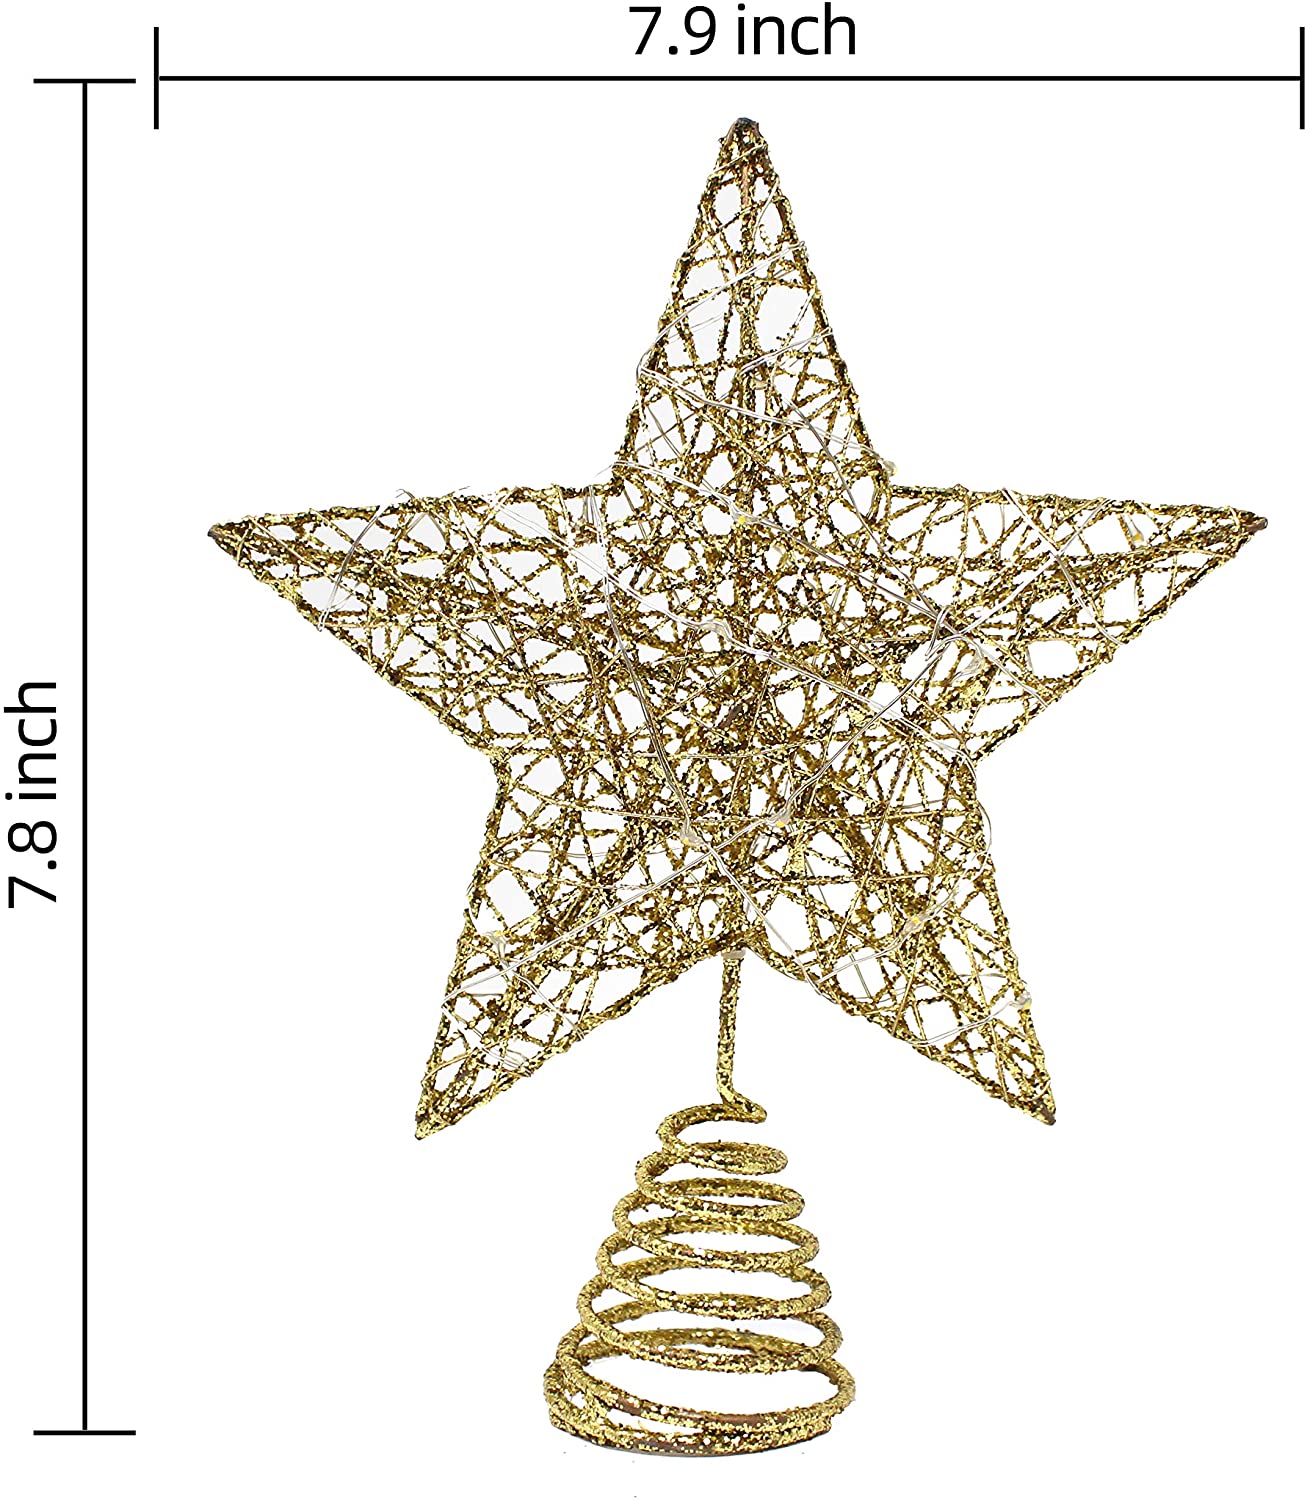 Gold Glitter Star Tree Topper